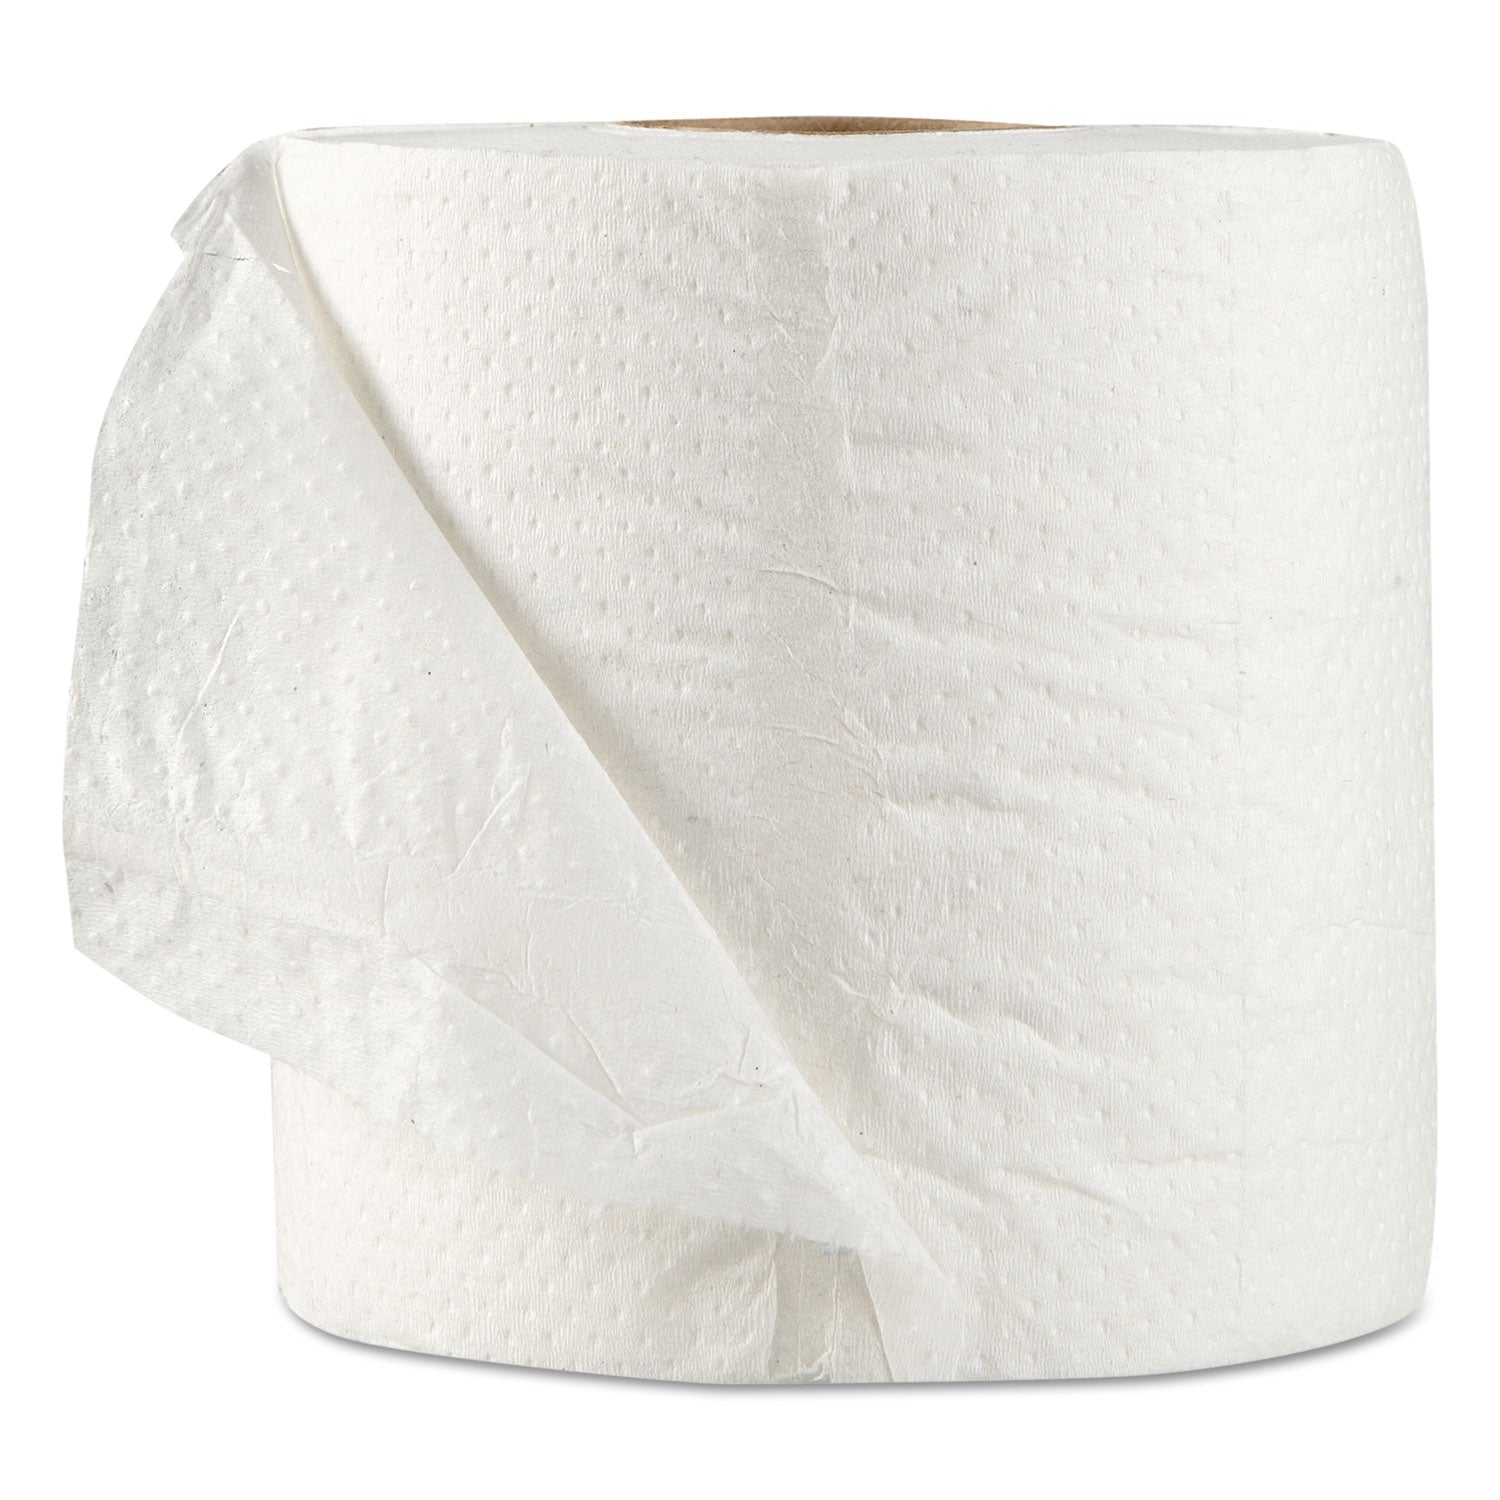 GEN Standard Bath Tissue, Septic Safe, 1-Ply, White, 1,000 Sheets/Roll, 96 Wrapped Rolls/Carton - GEN218